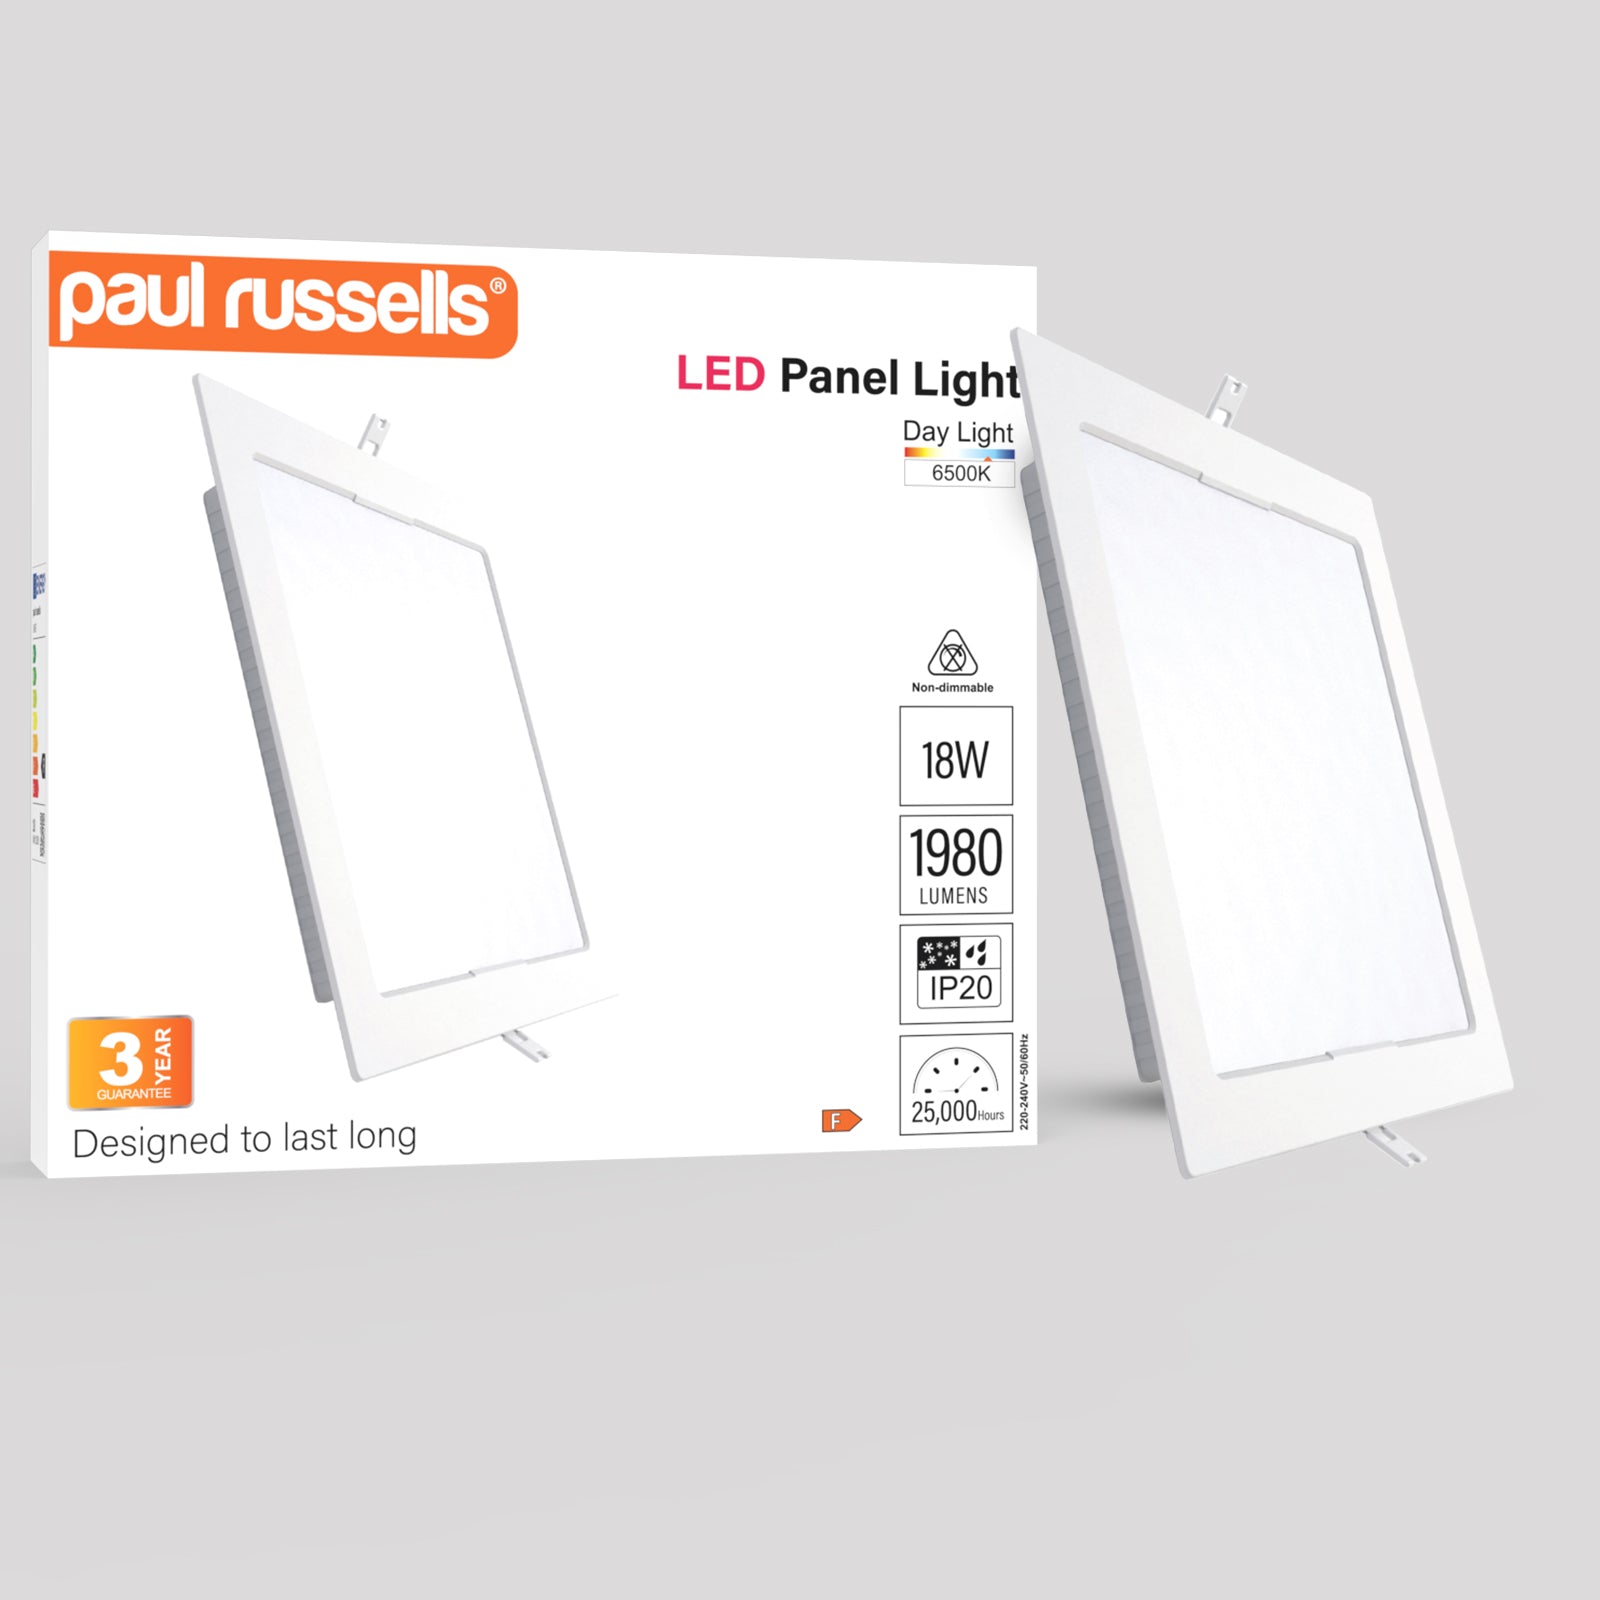 LED Square Panel 18W Day Light Ultra Slim Ceiling Light Bulbs